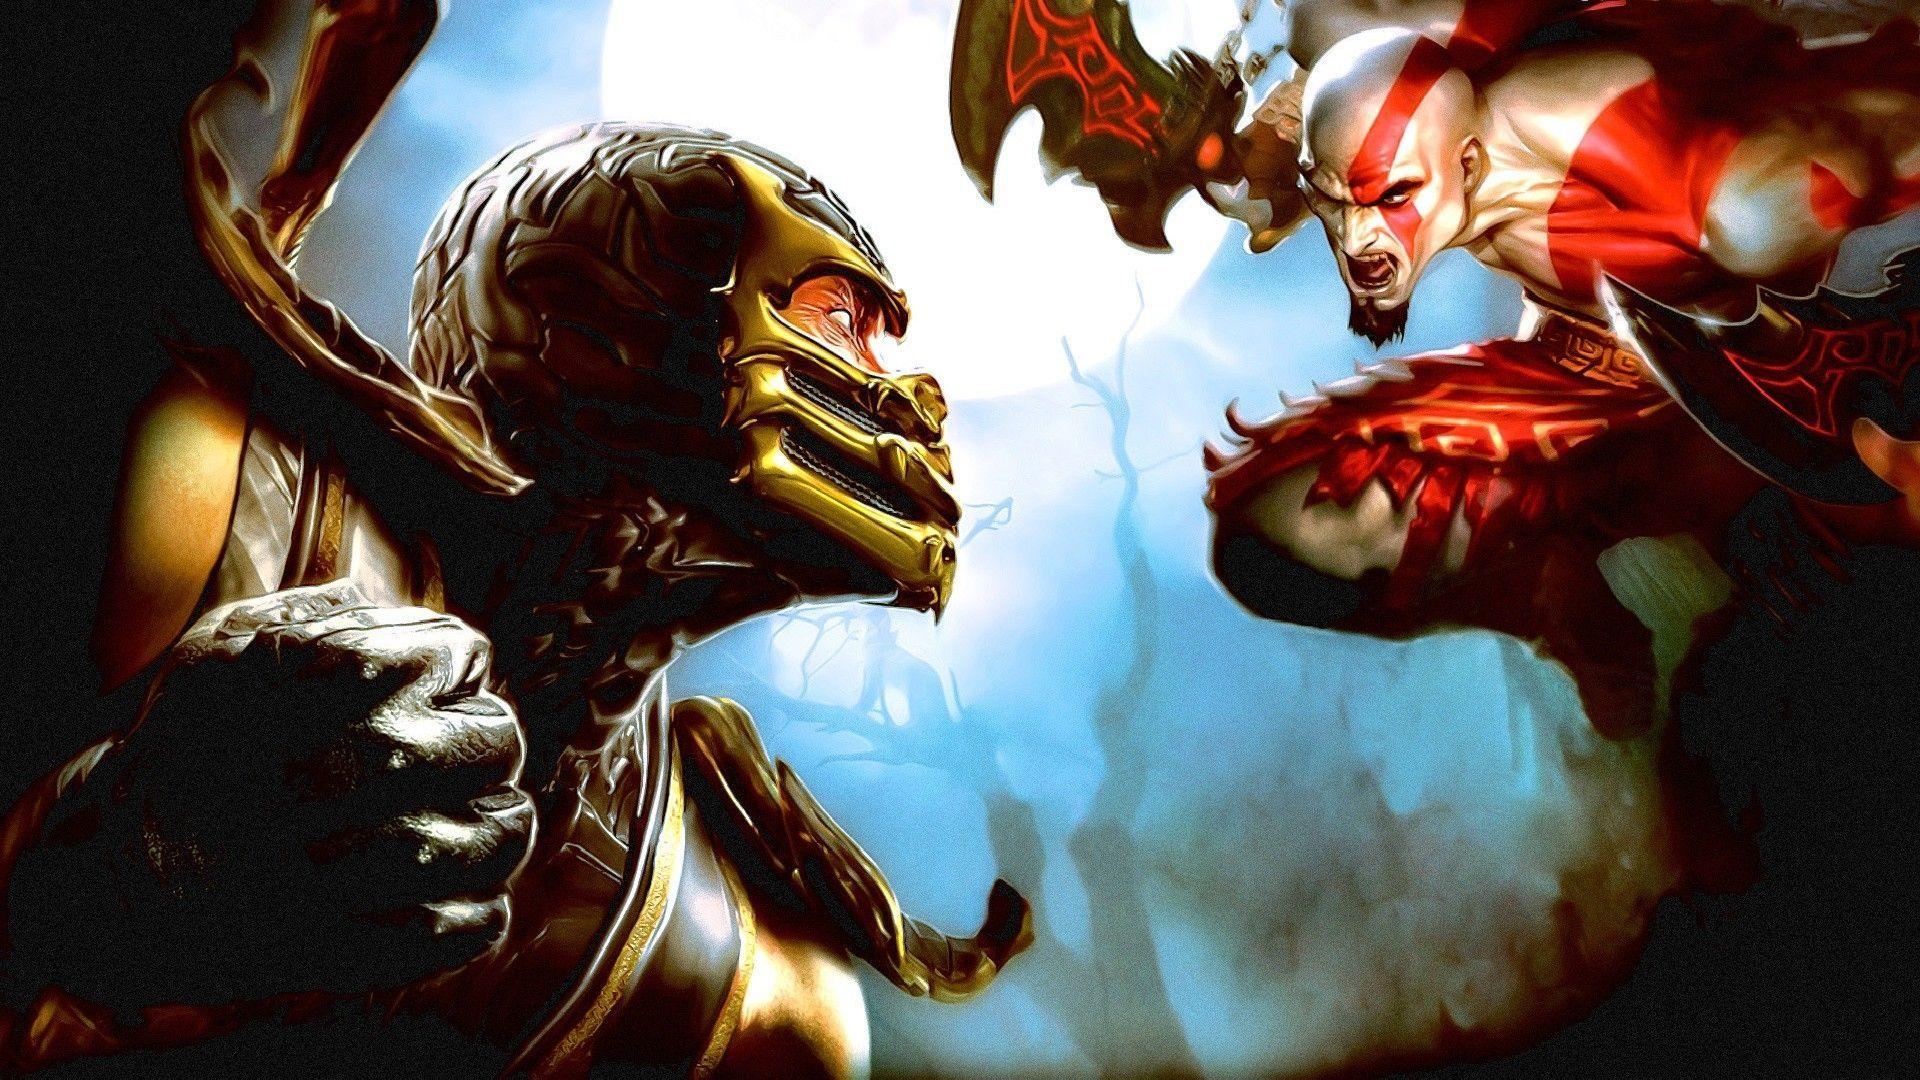 Full HD 1080p Mortal kombat Wallpaper HD, Desktop. Epic